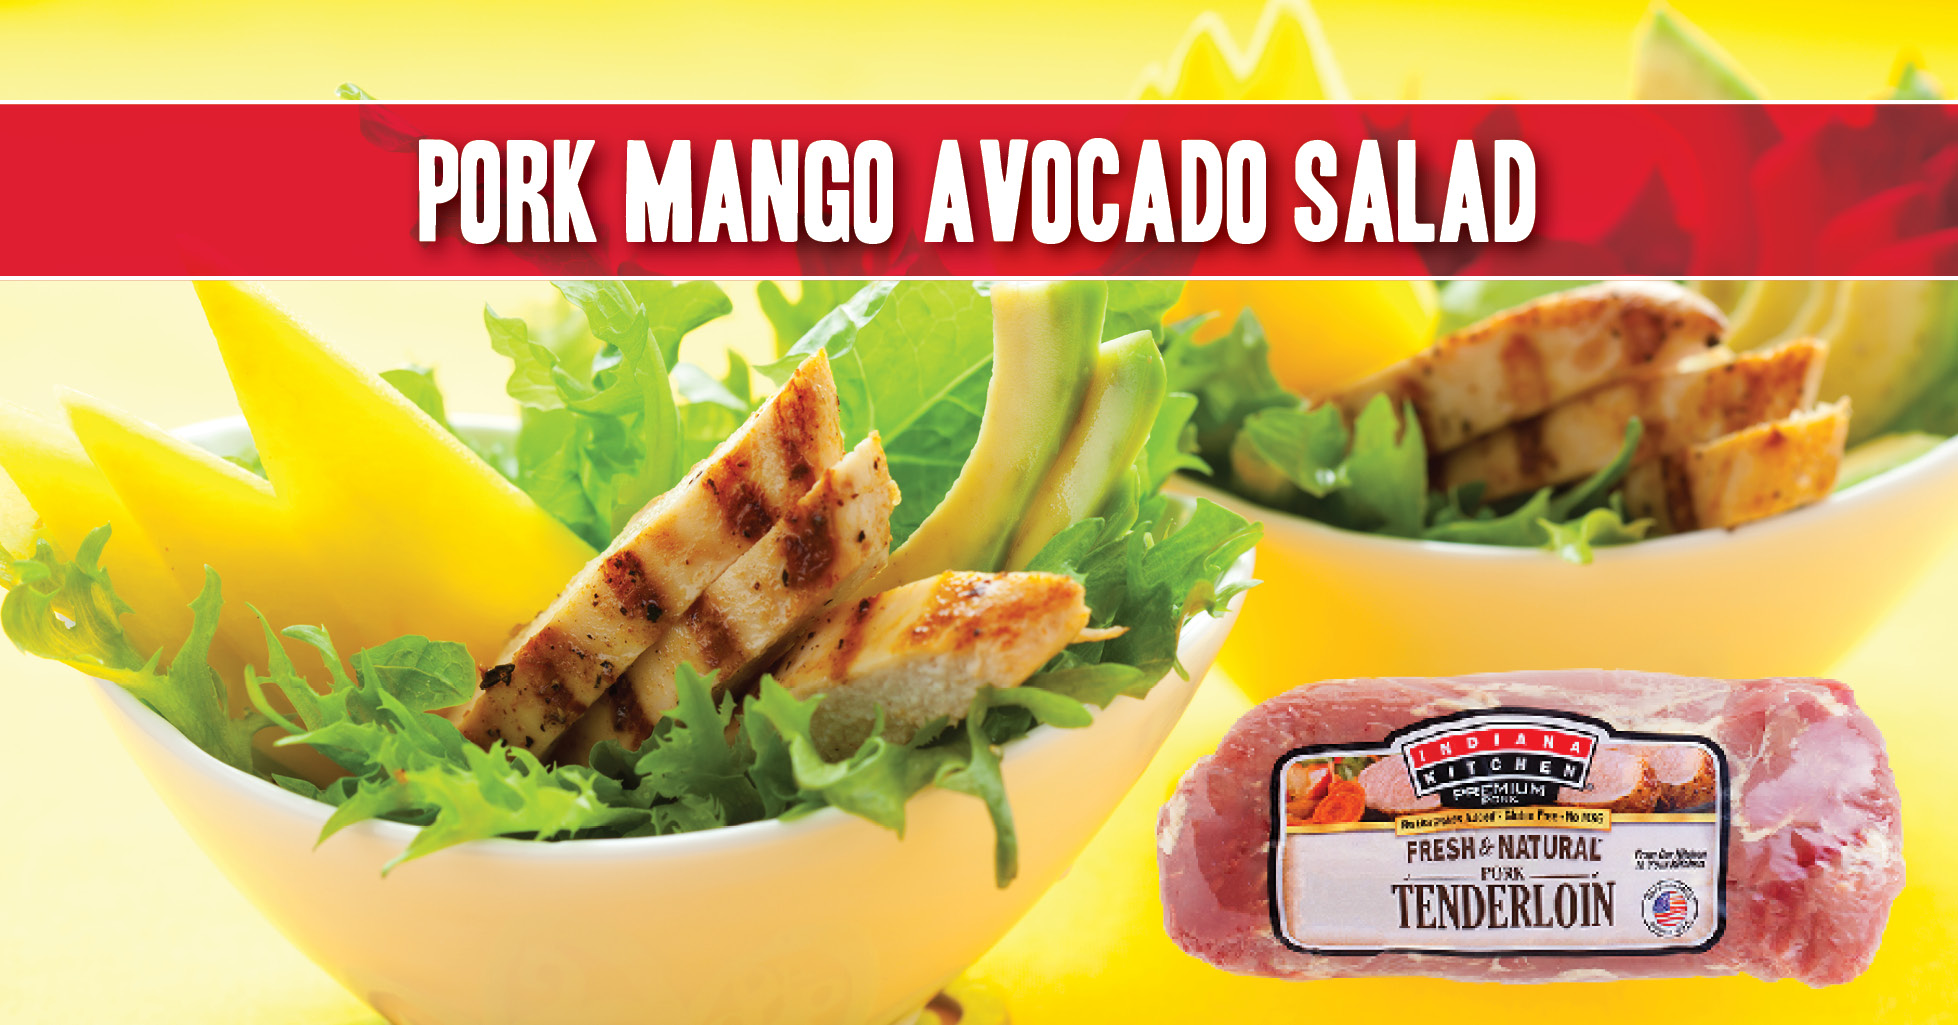 pork mango avocado salad featuring indiana kitchen pork tenderloin